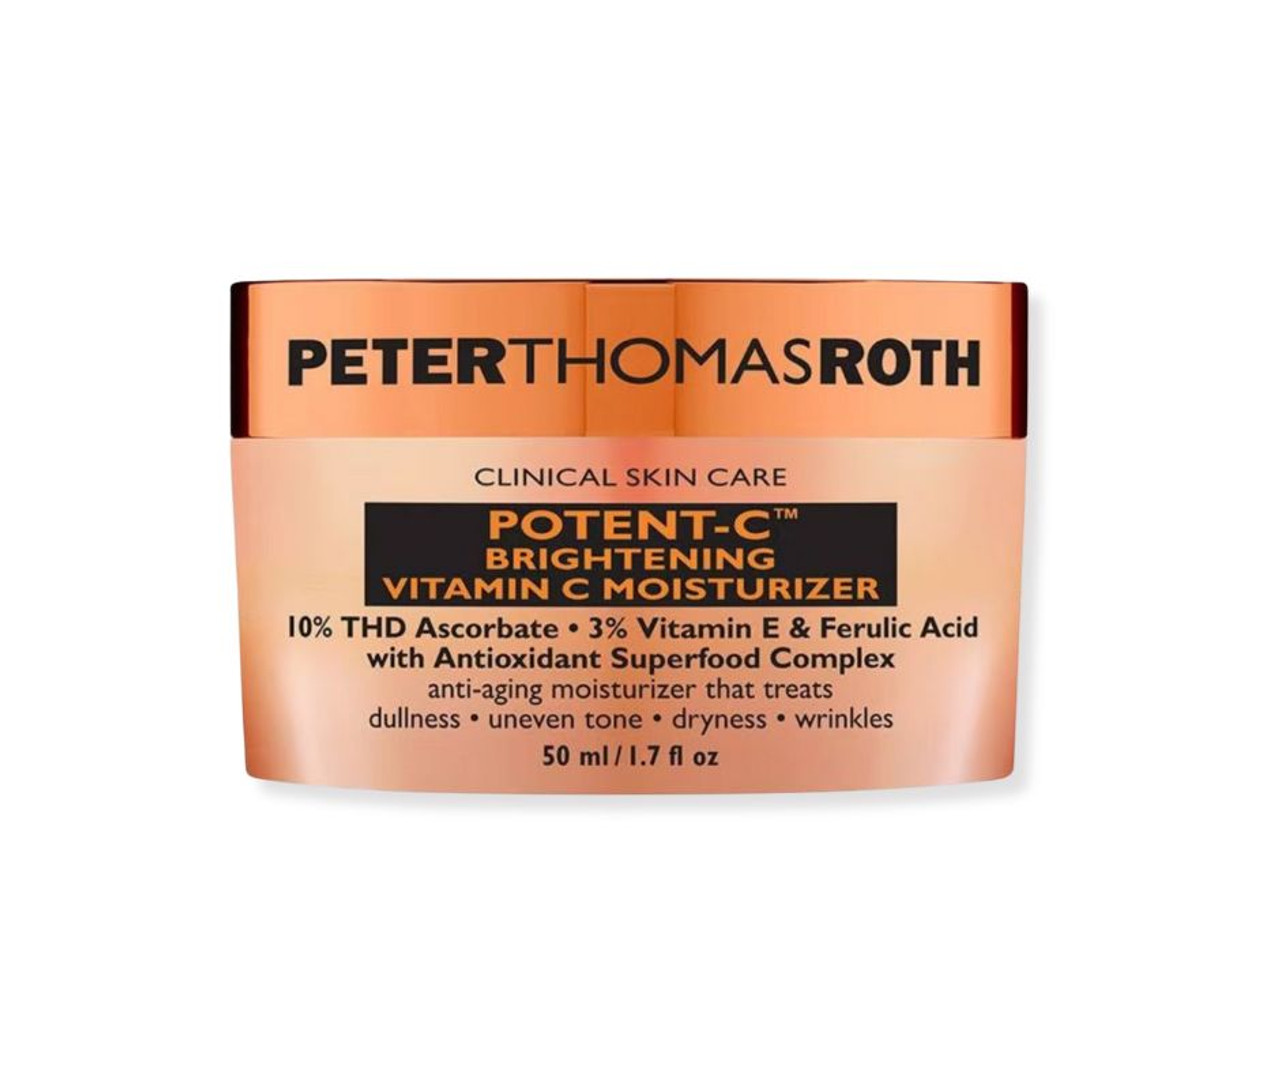 Peter Thomas Roth Potent-C Brightening Vitamin C Moisturizer 